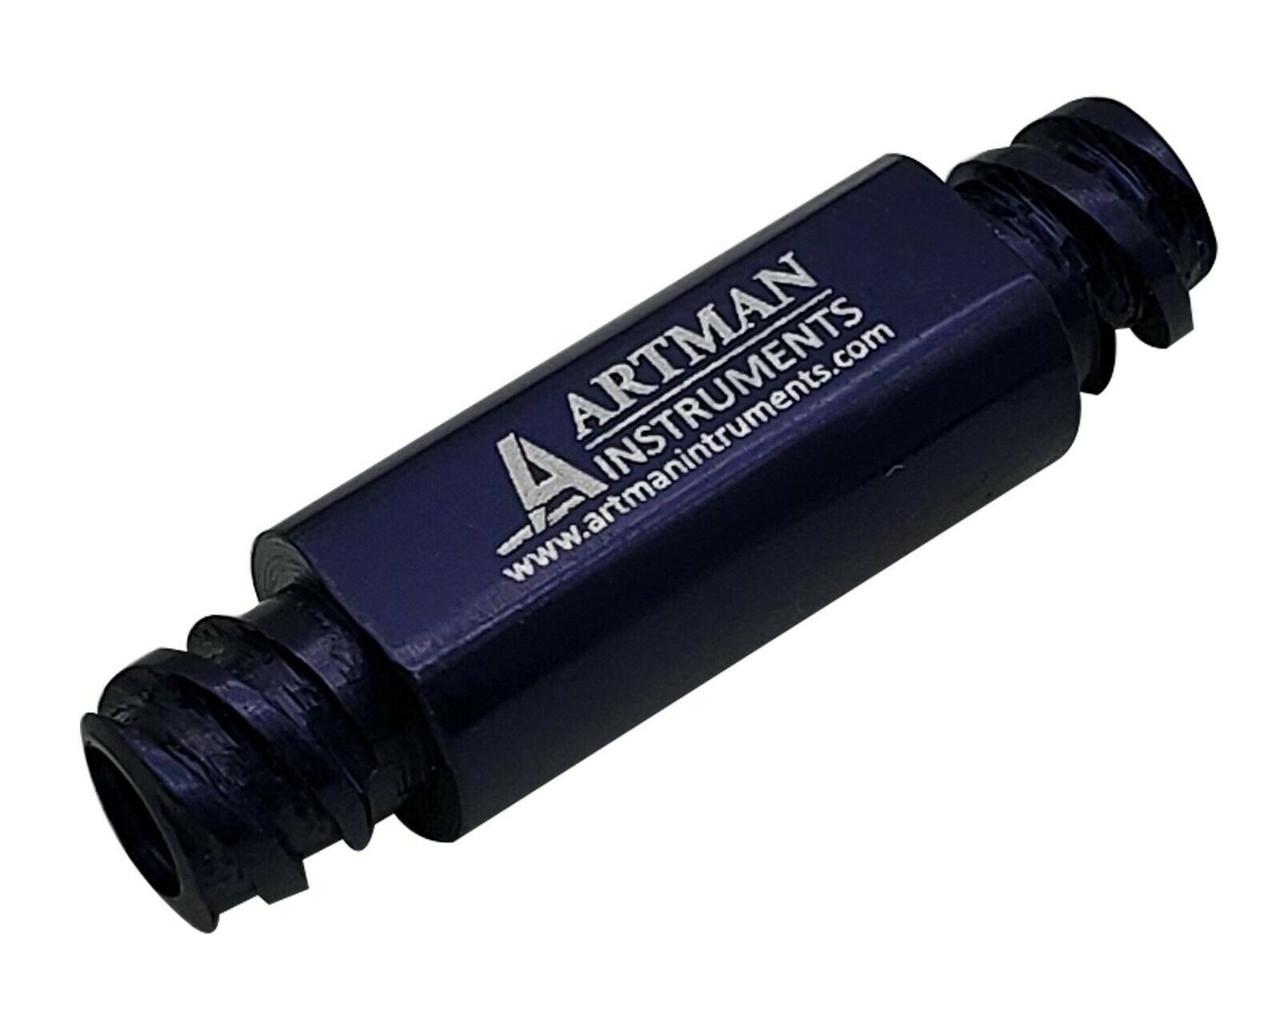 Transfer Adapter set of 2 for Luer Lock Cannula Liposuction cannula ARTMAN brand